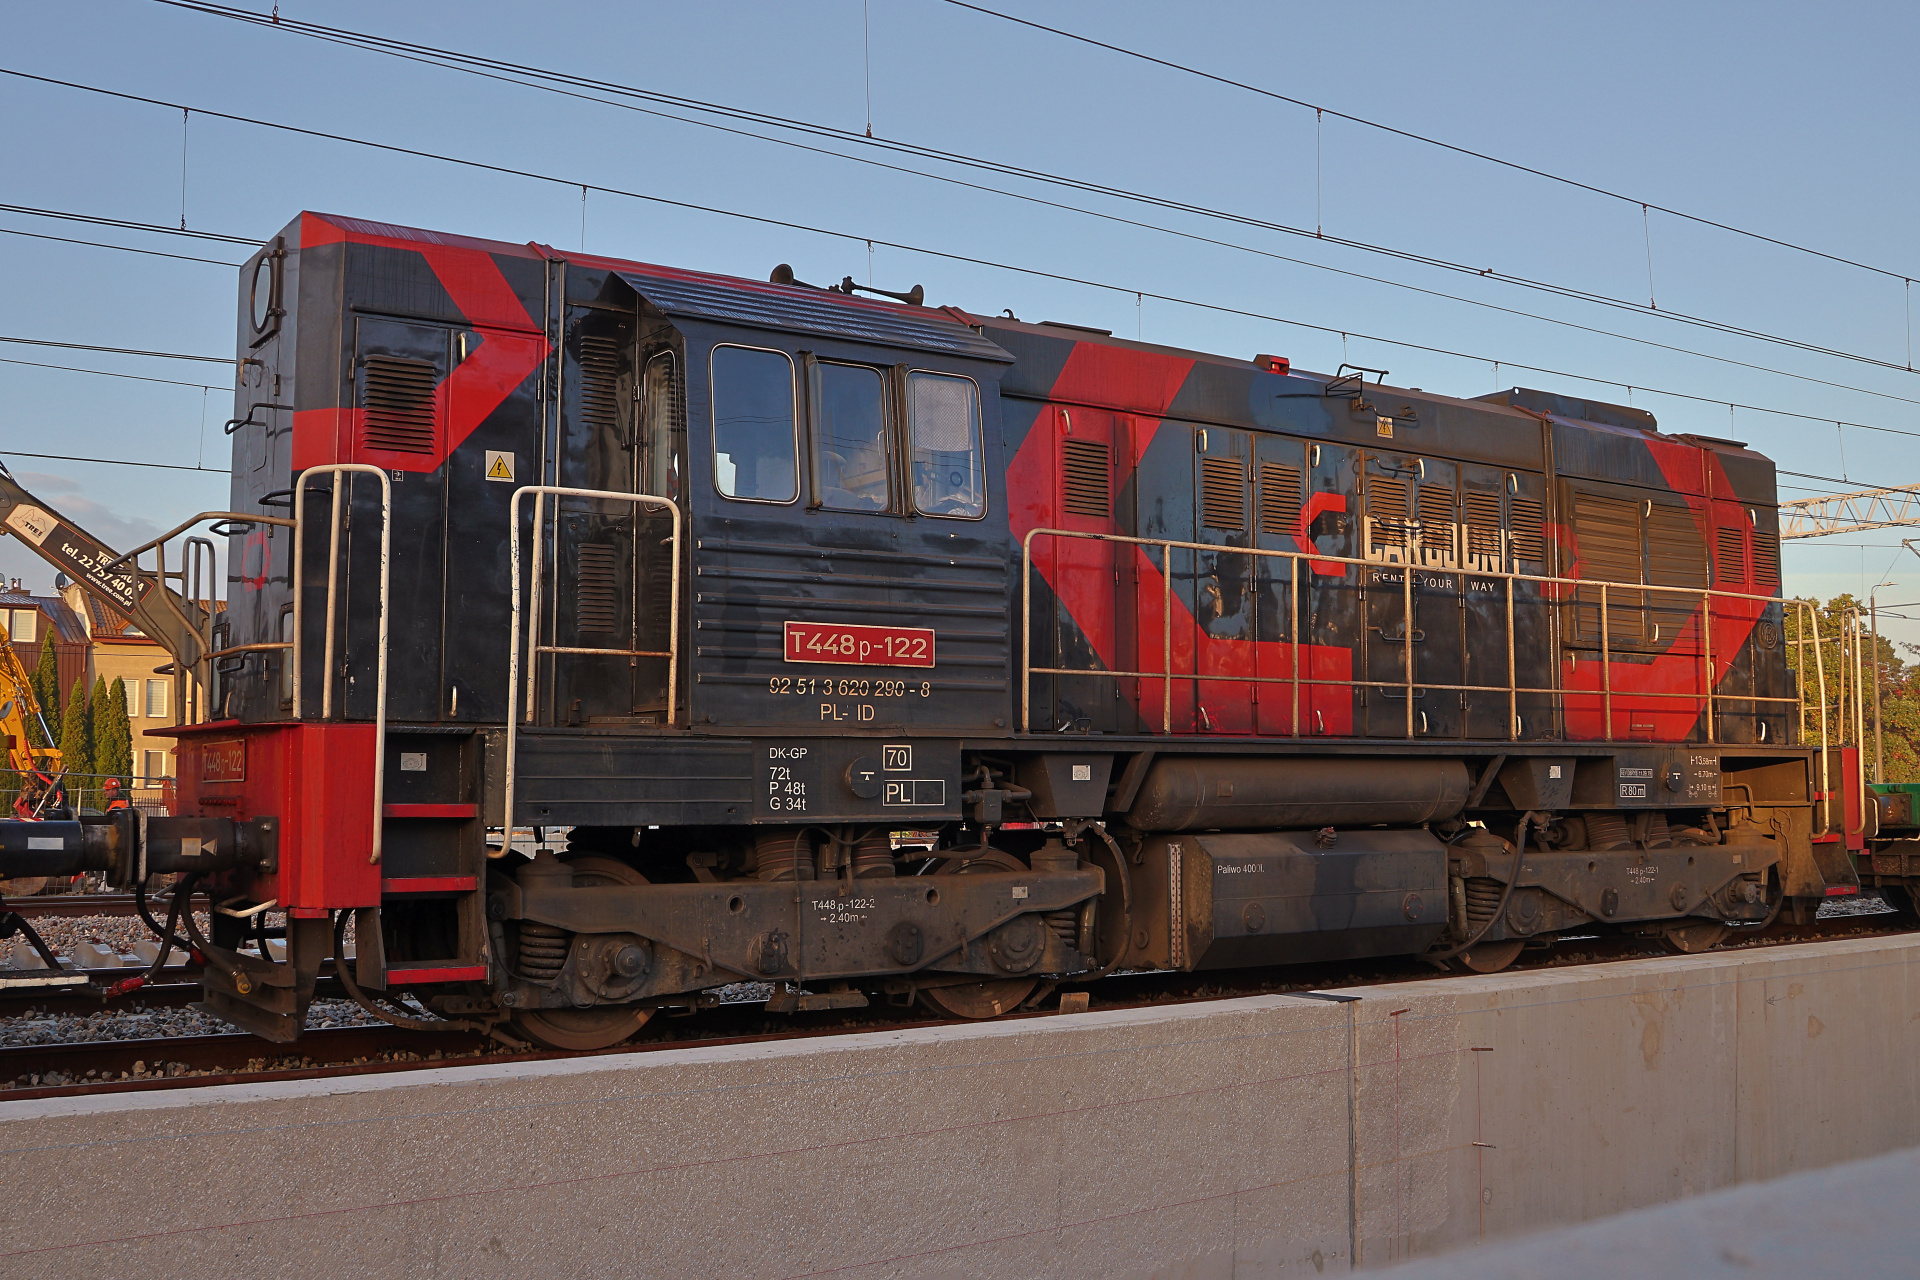 ČKD T448p-122 (Vehicles » Trains and Locomotives)